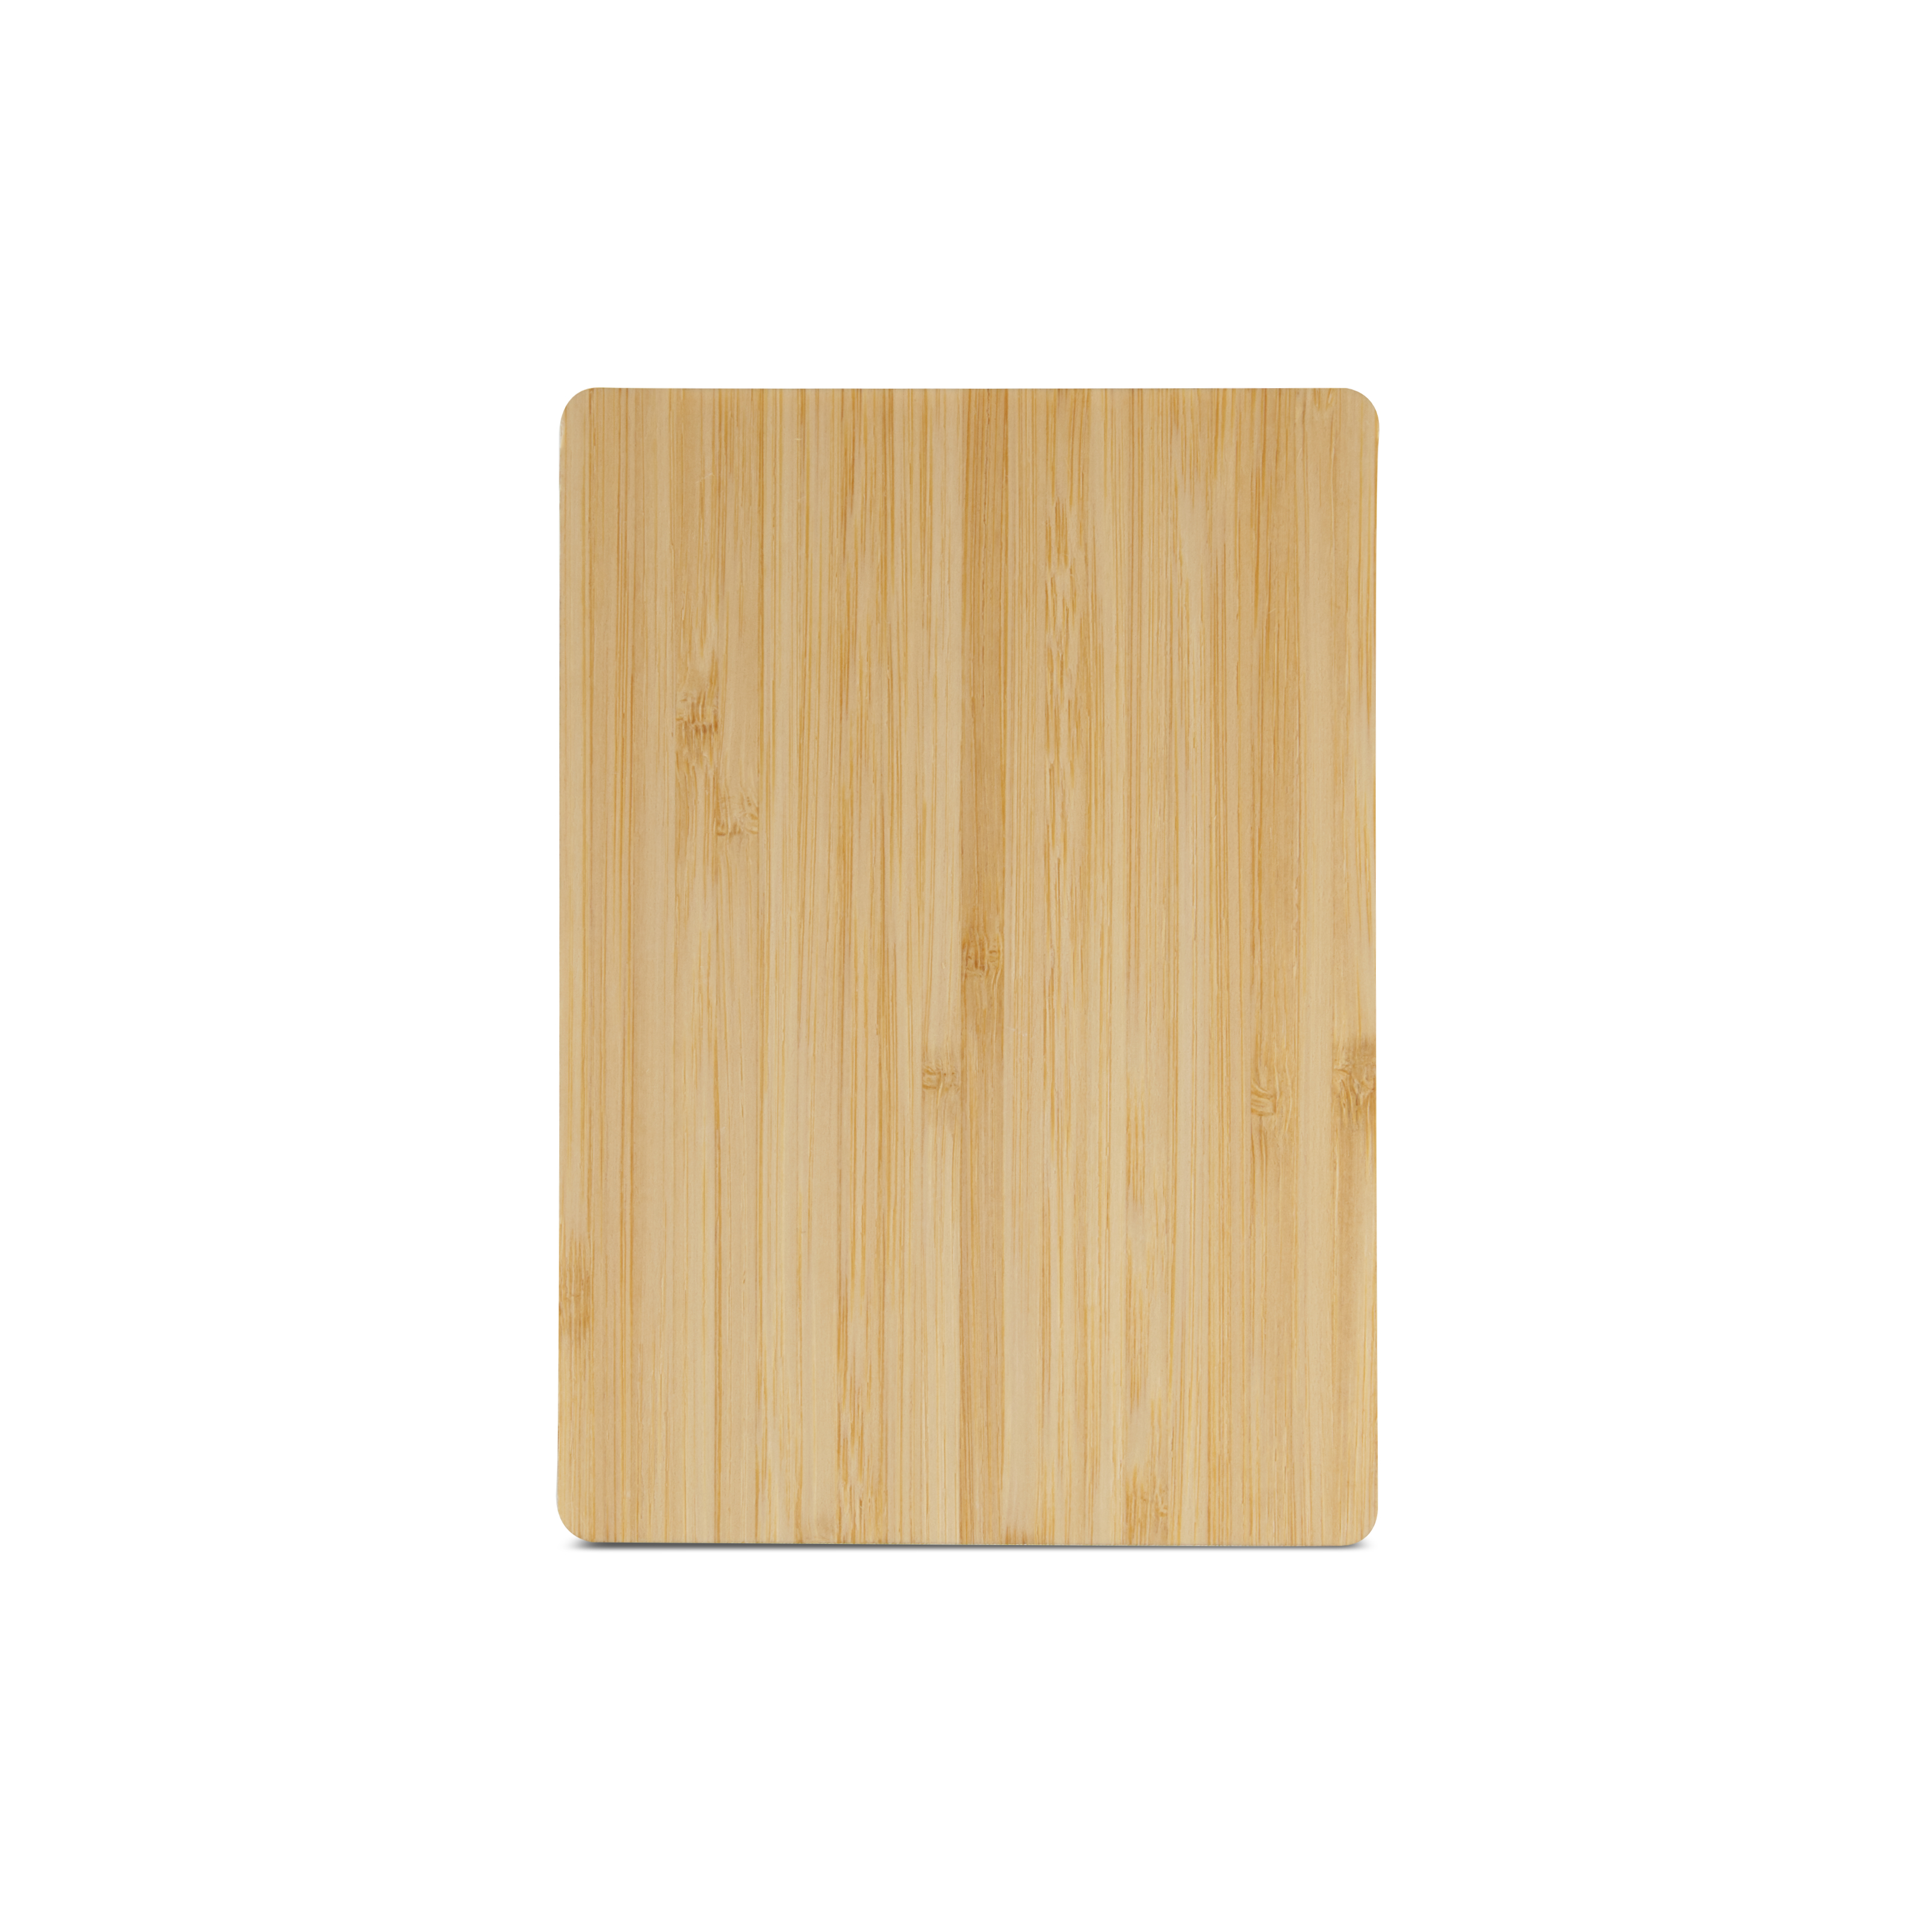 NFC Schild Bambus beidseitig bedruckt - A6 - NTAG213 - 180 Byte - Holzoptik